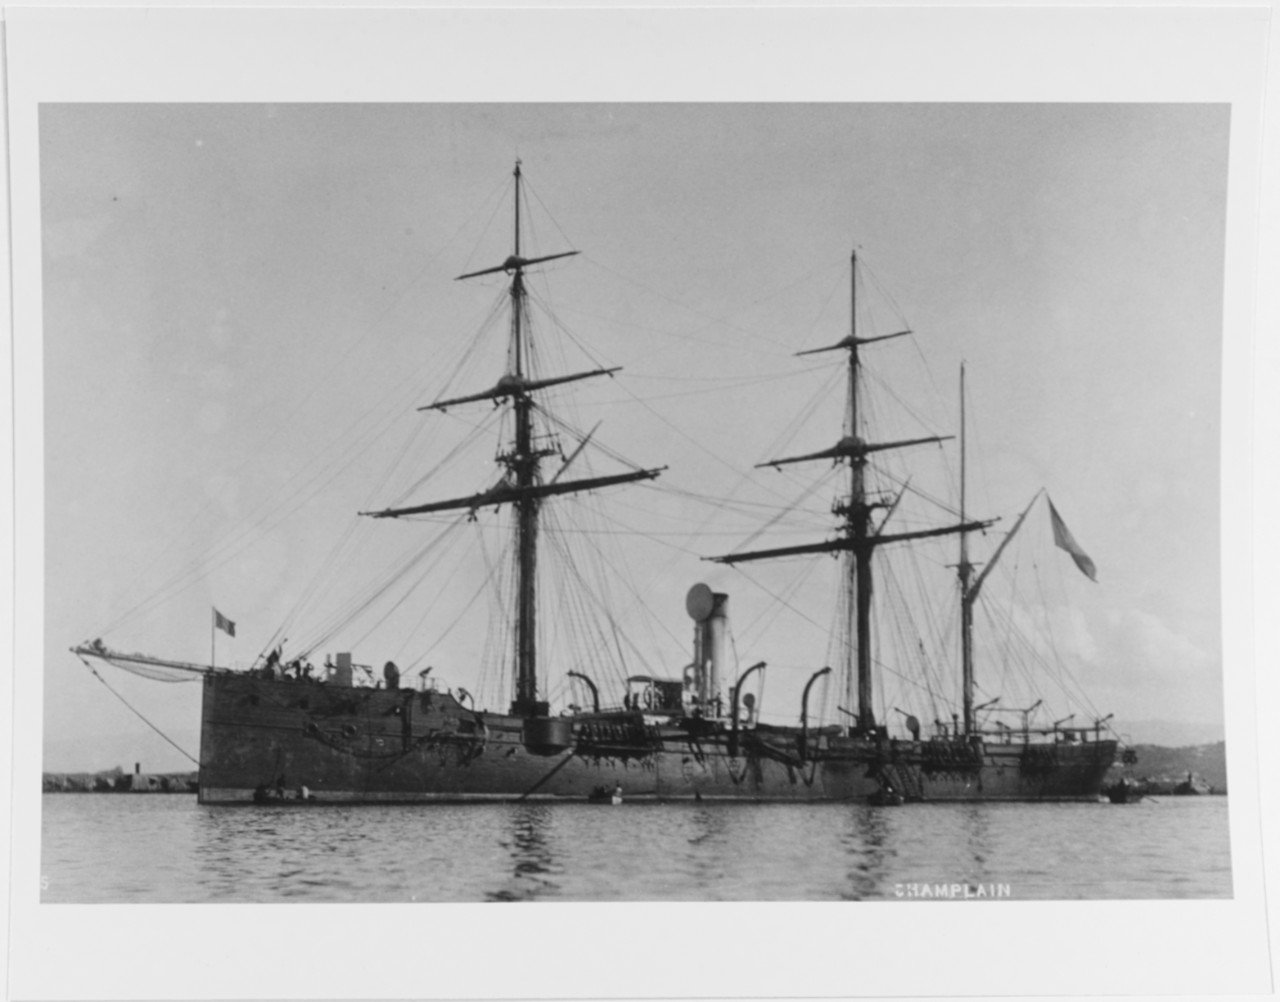 CHAMPLAIN (French Cruiser, 1872-93)